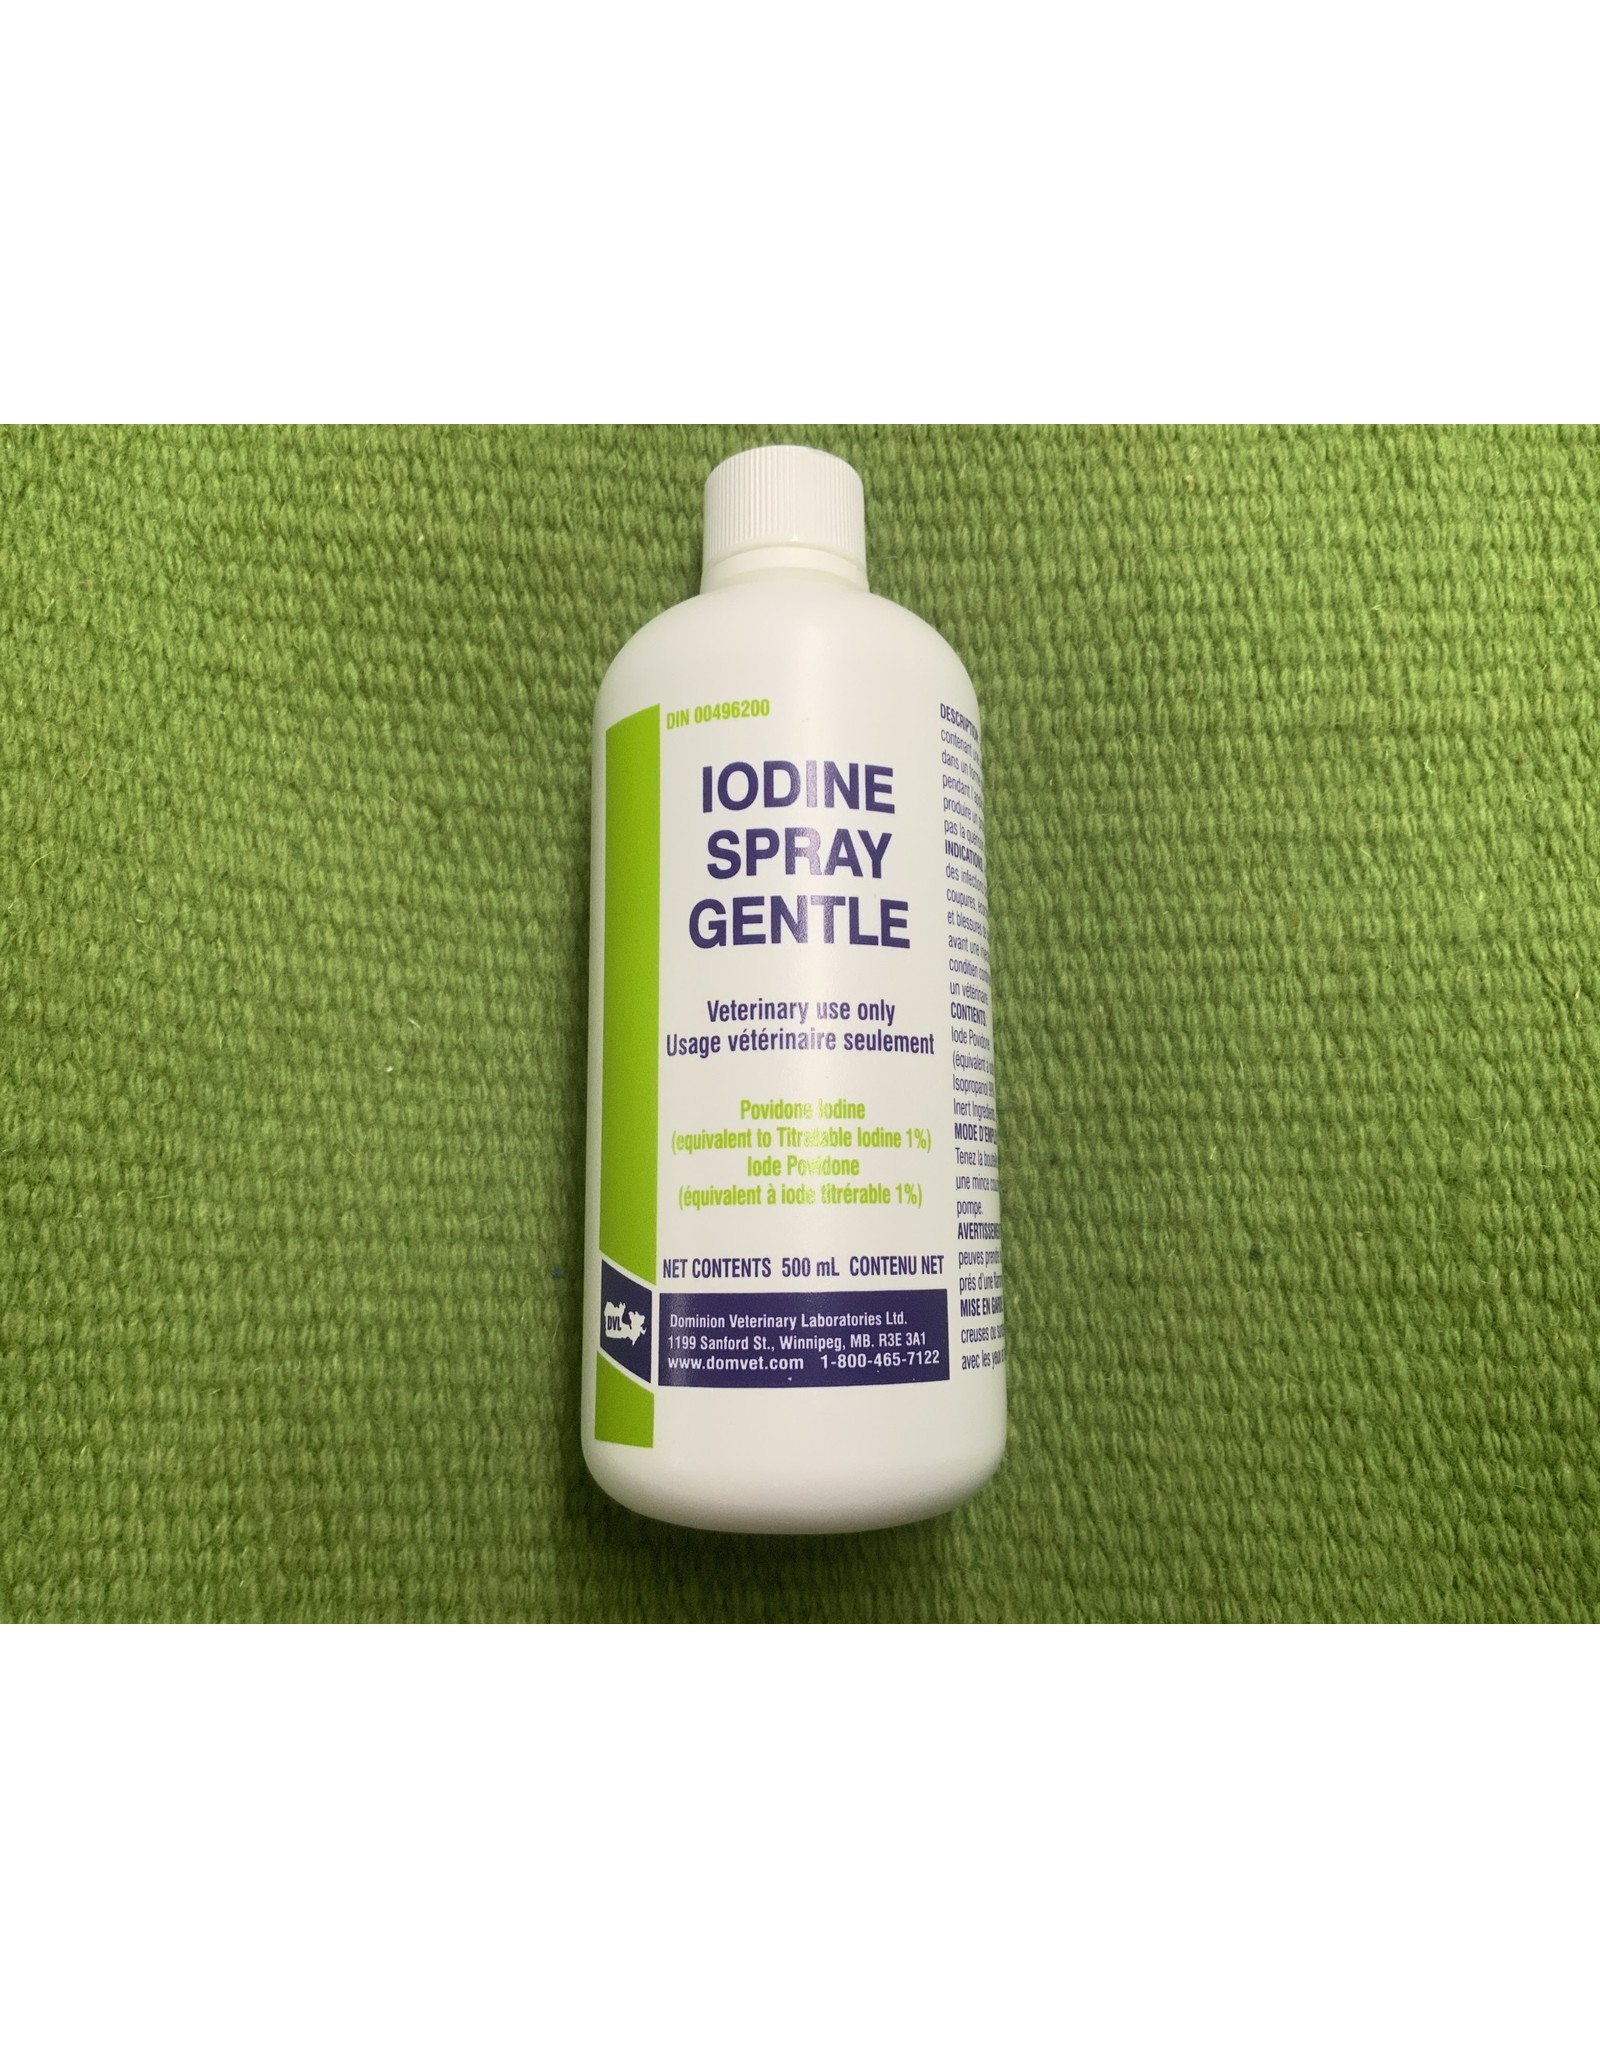 DVL Iodine Spray 1% 500 ml - 002-583 DIN:00496200